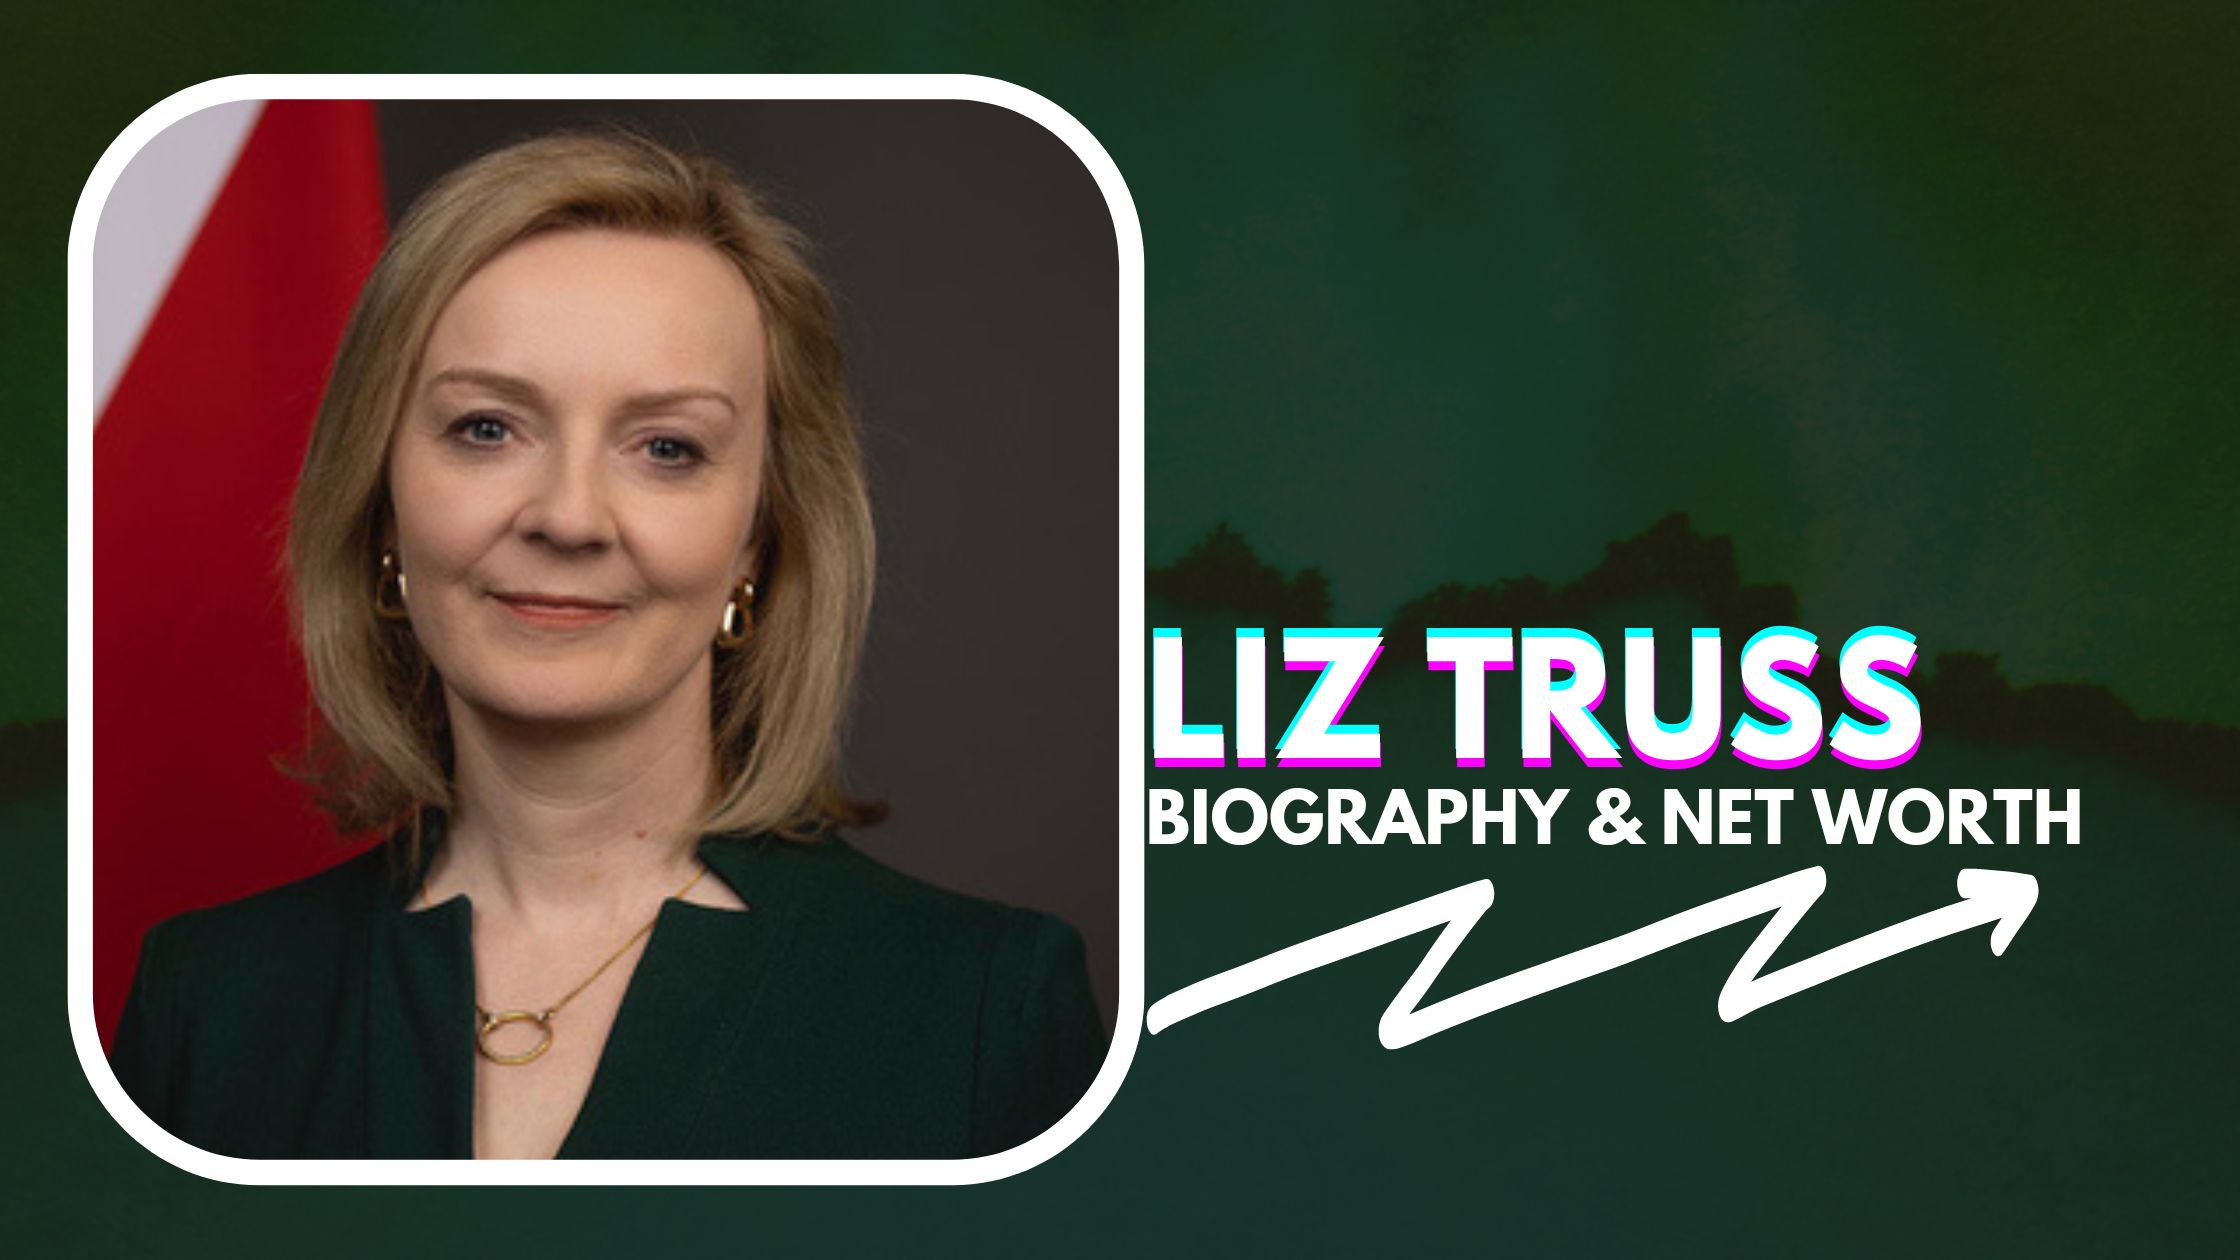 Liz Truss Net Worth and Biography